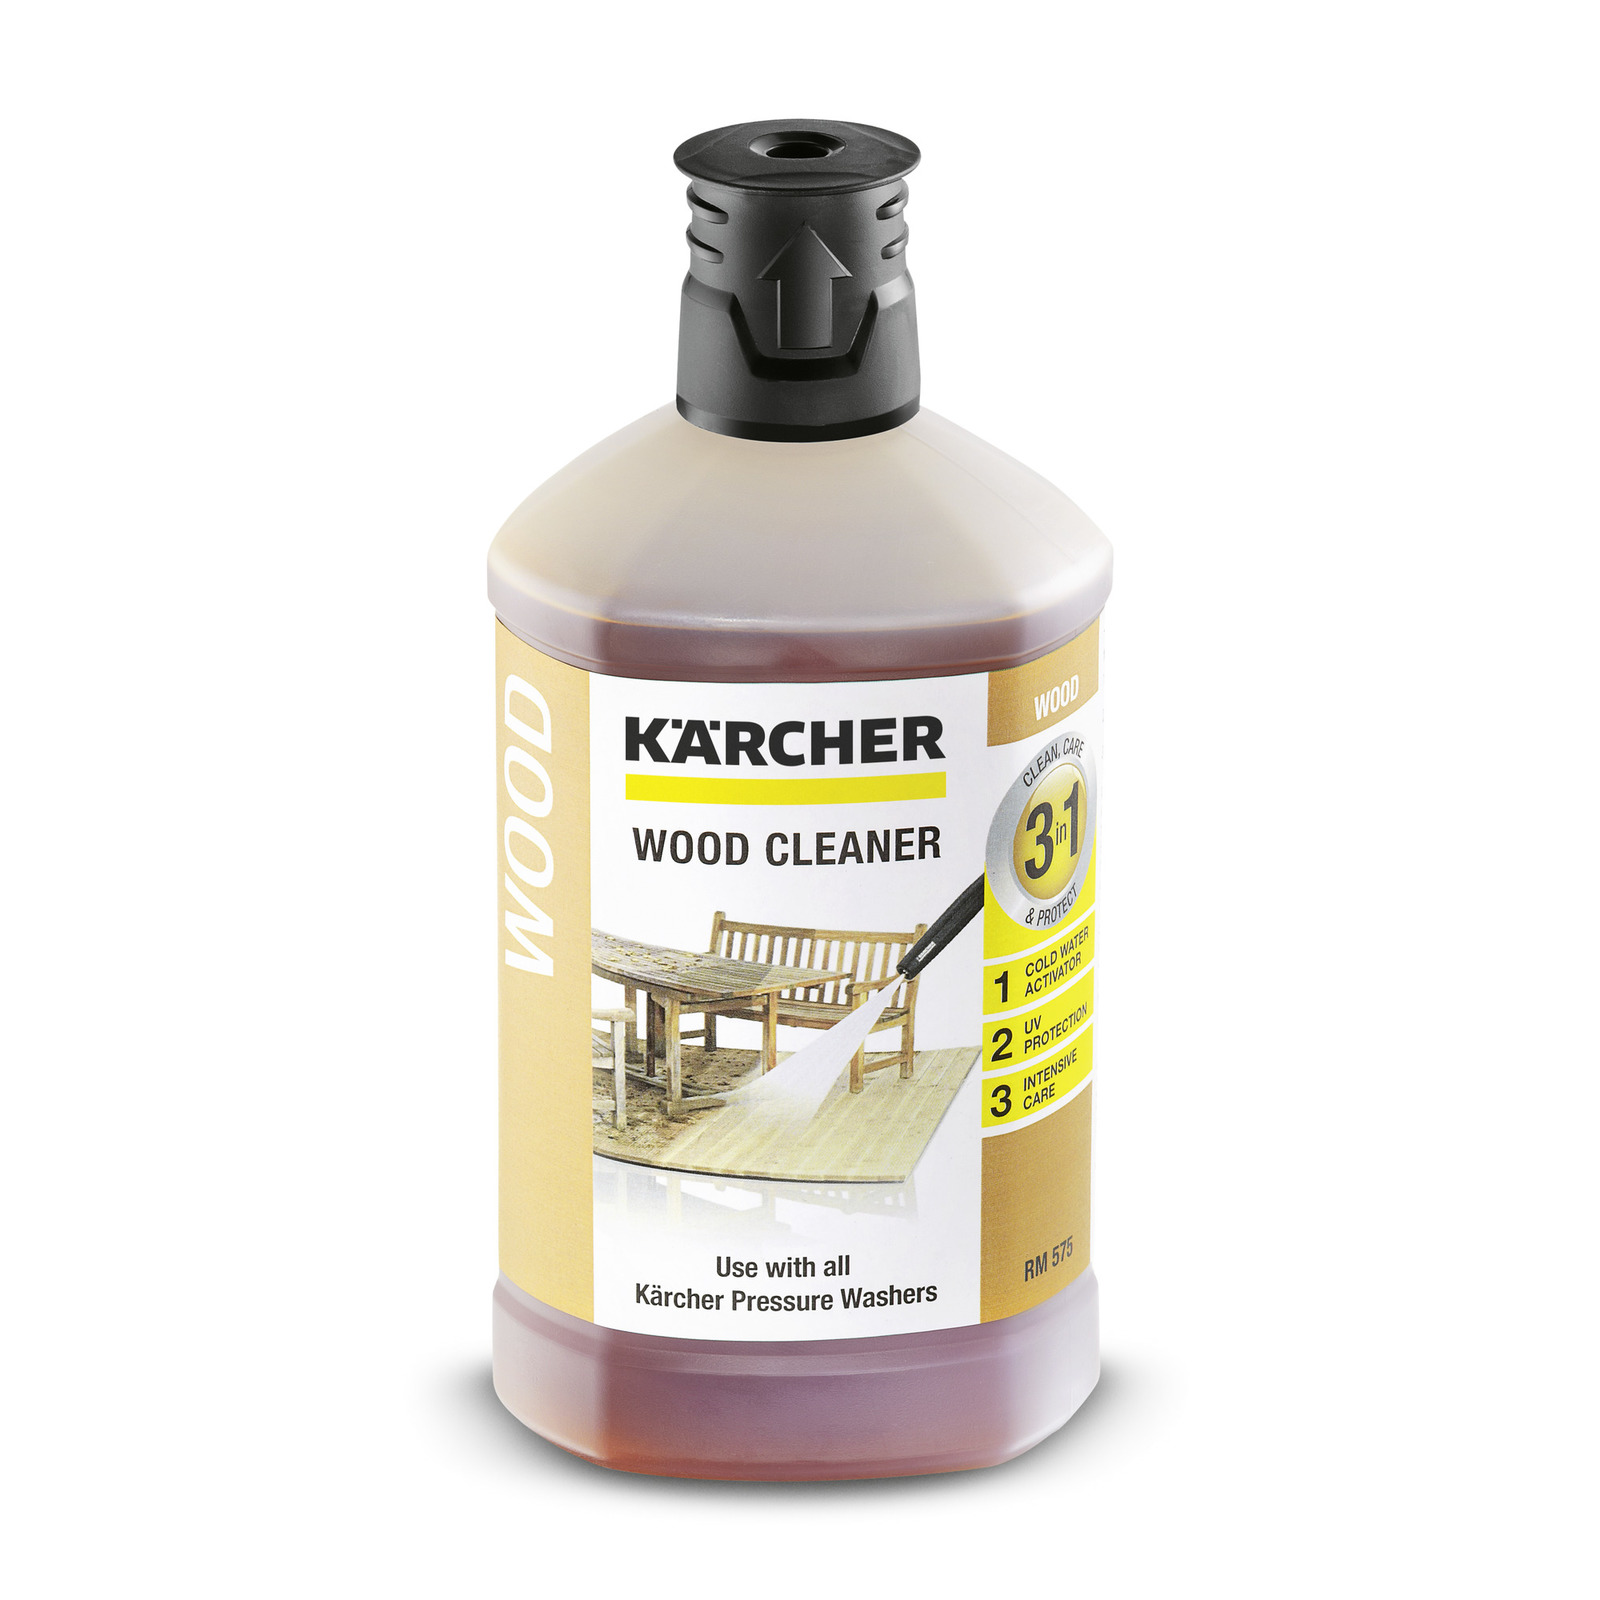 KARCHER 3-IN-1 WOOD CLEANER DETERGENT